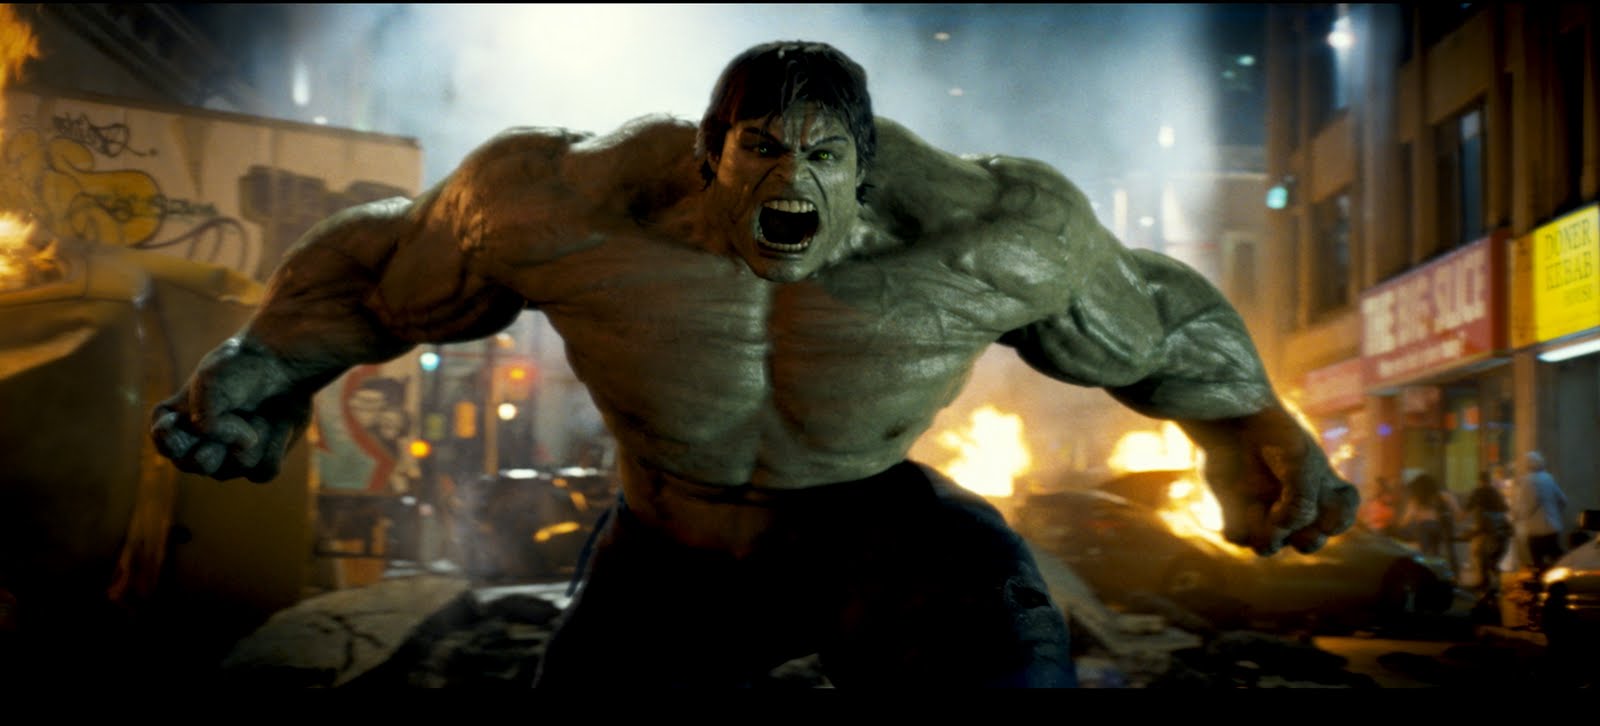 Angry Hulk HD Wallpaper